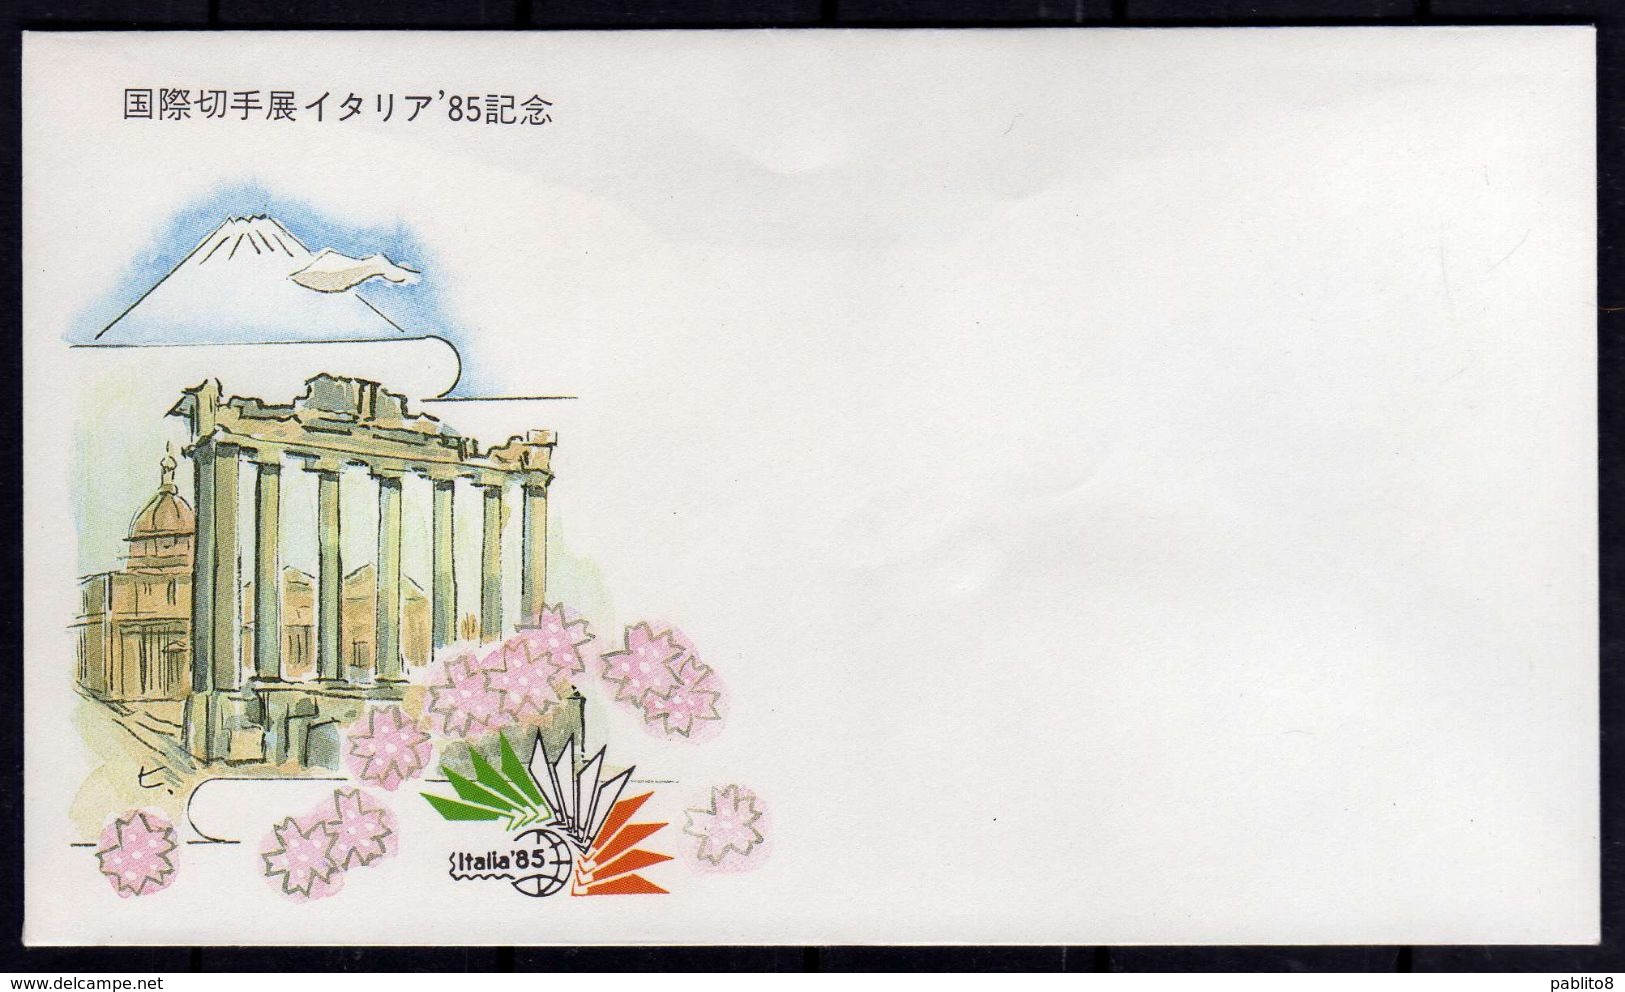 JAPAN NIPPON GIAPPONE JAPON 1985 ITALIA 85 PHILATELIC EXHIBITION STAMP ESPOSITION POSTAL ENTIRE COVER UNUSED - Enveloppes